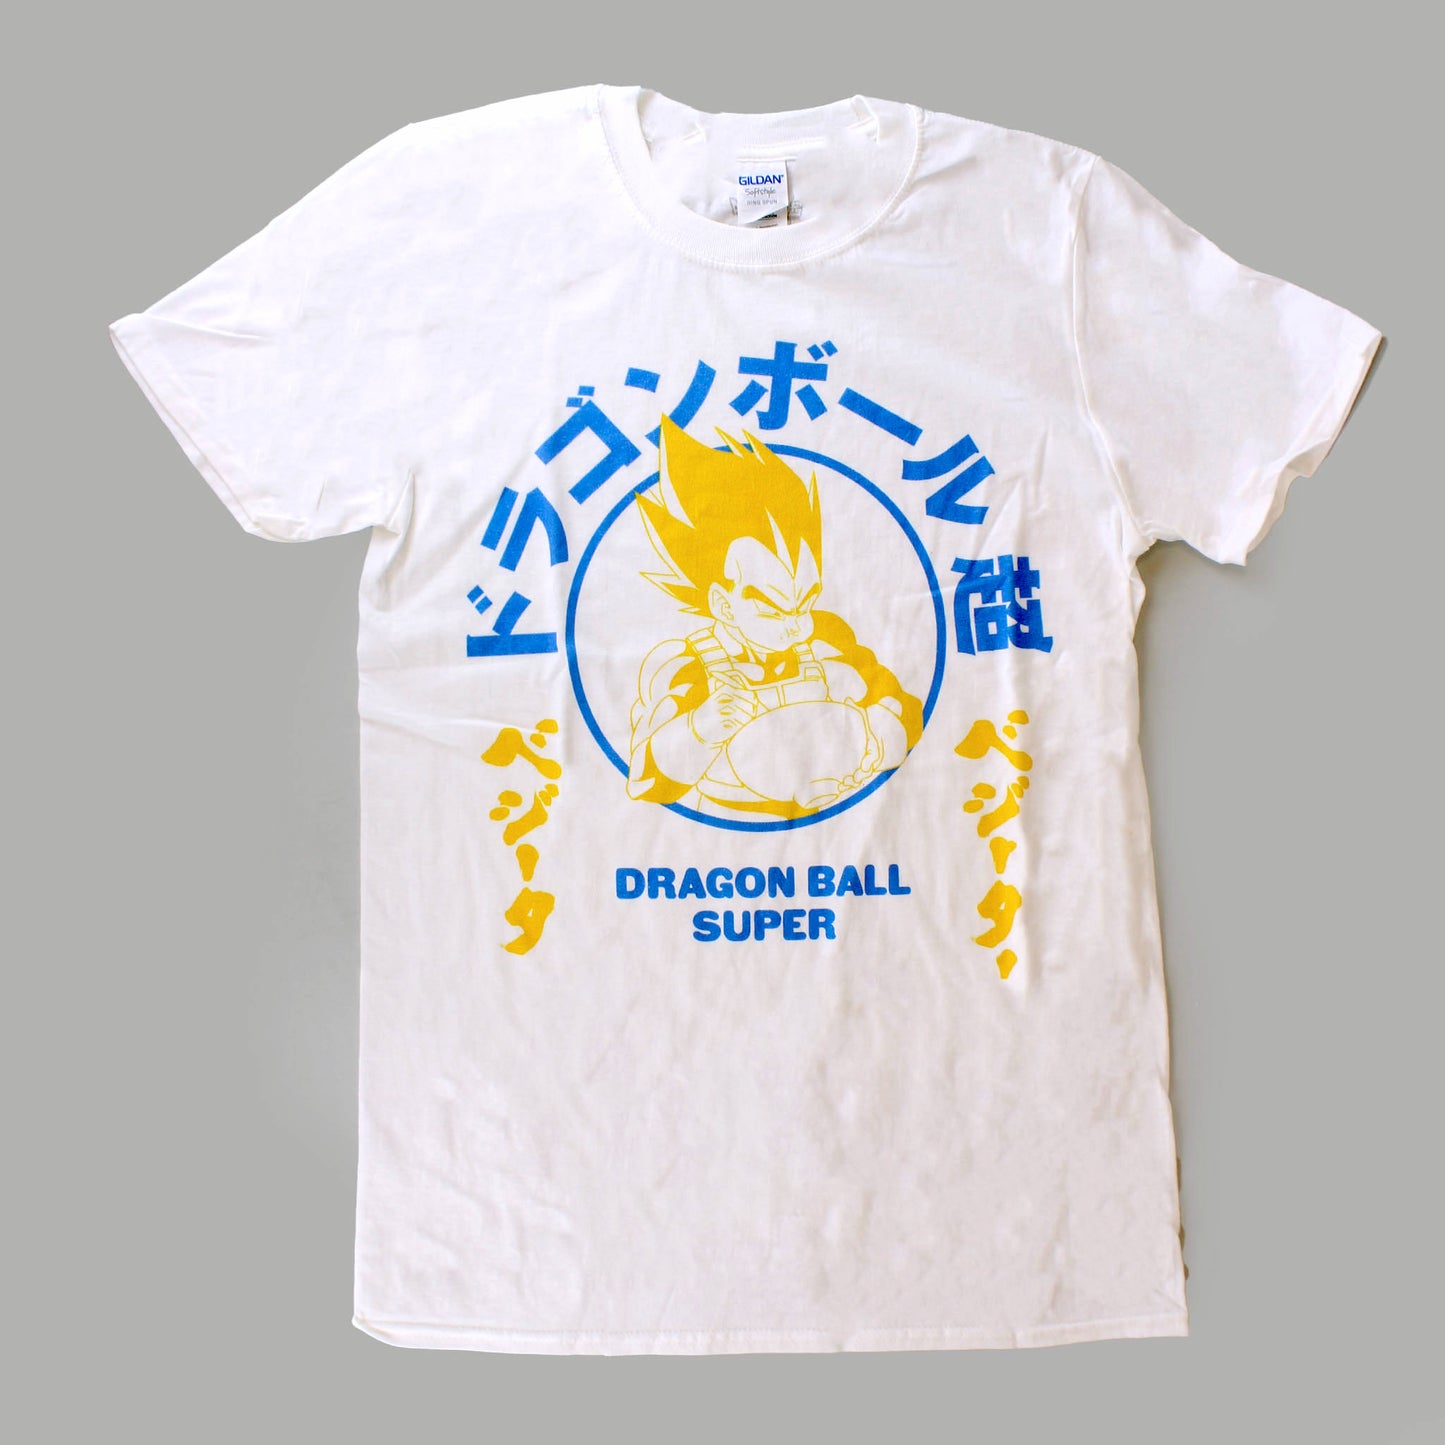 *Clearance* Vegeta (Dragon Ball Super) White Unisex Shirt